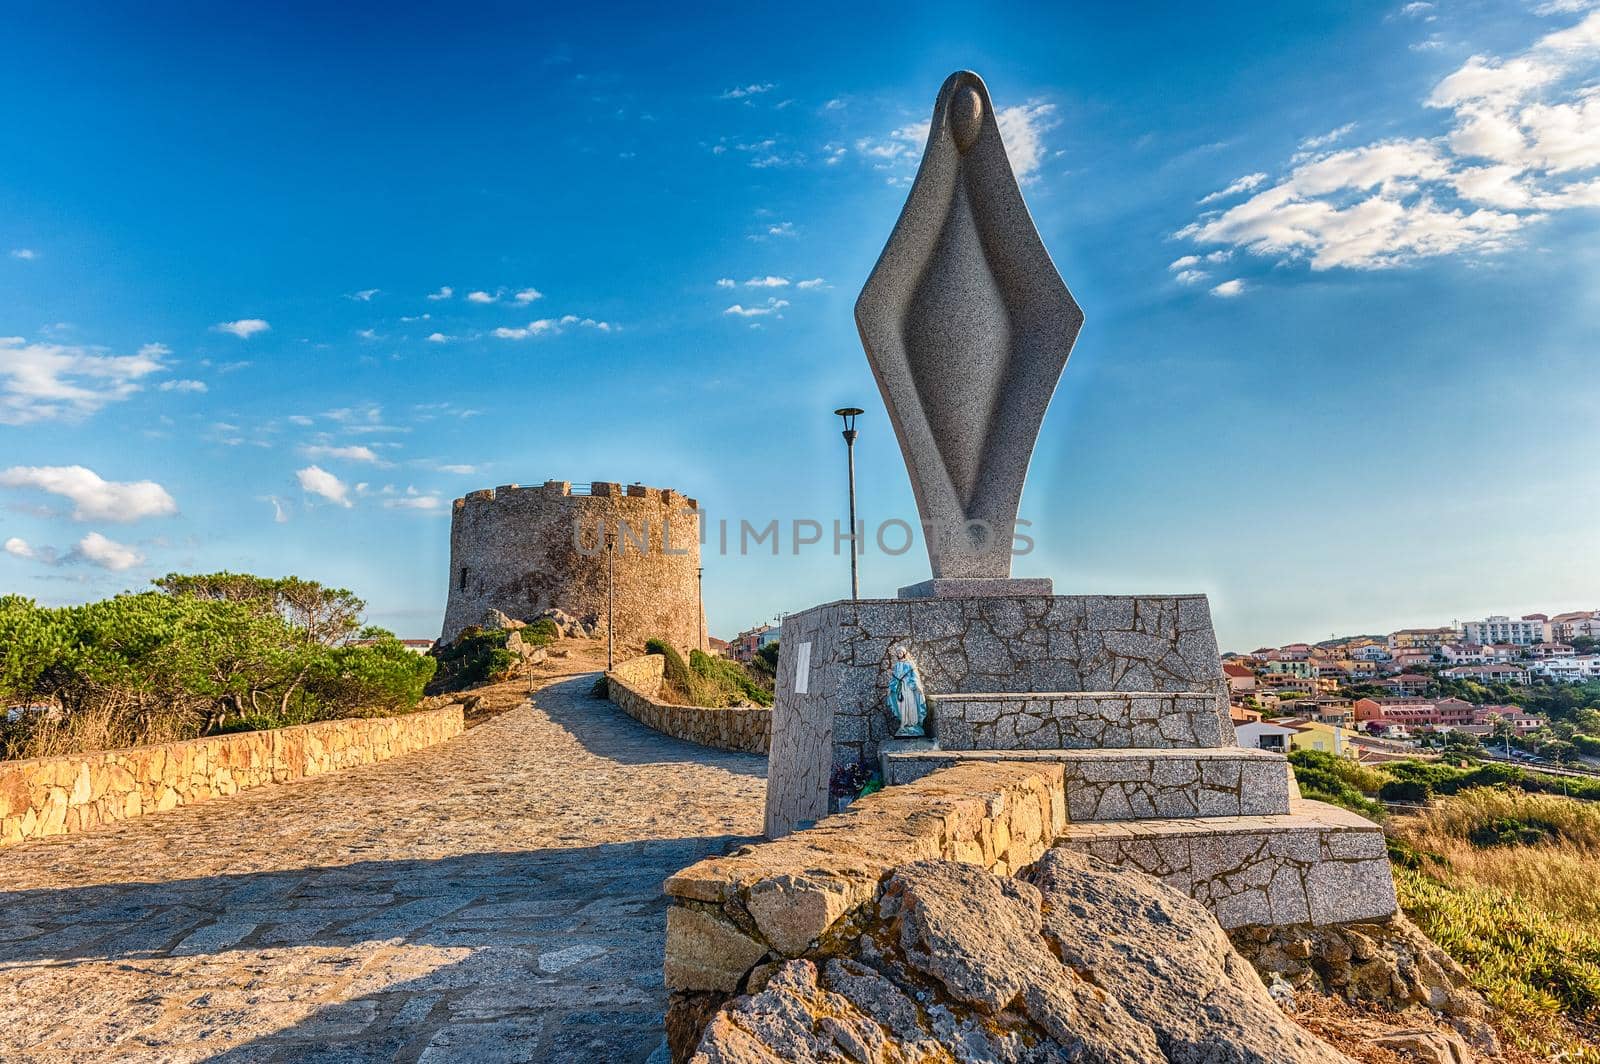 View of Longonsardo tower or spanish tower, iconic landmark in Santa Teresa Gallura, located on the northern tip of Sardinia, in the province of Sassari, Italy